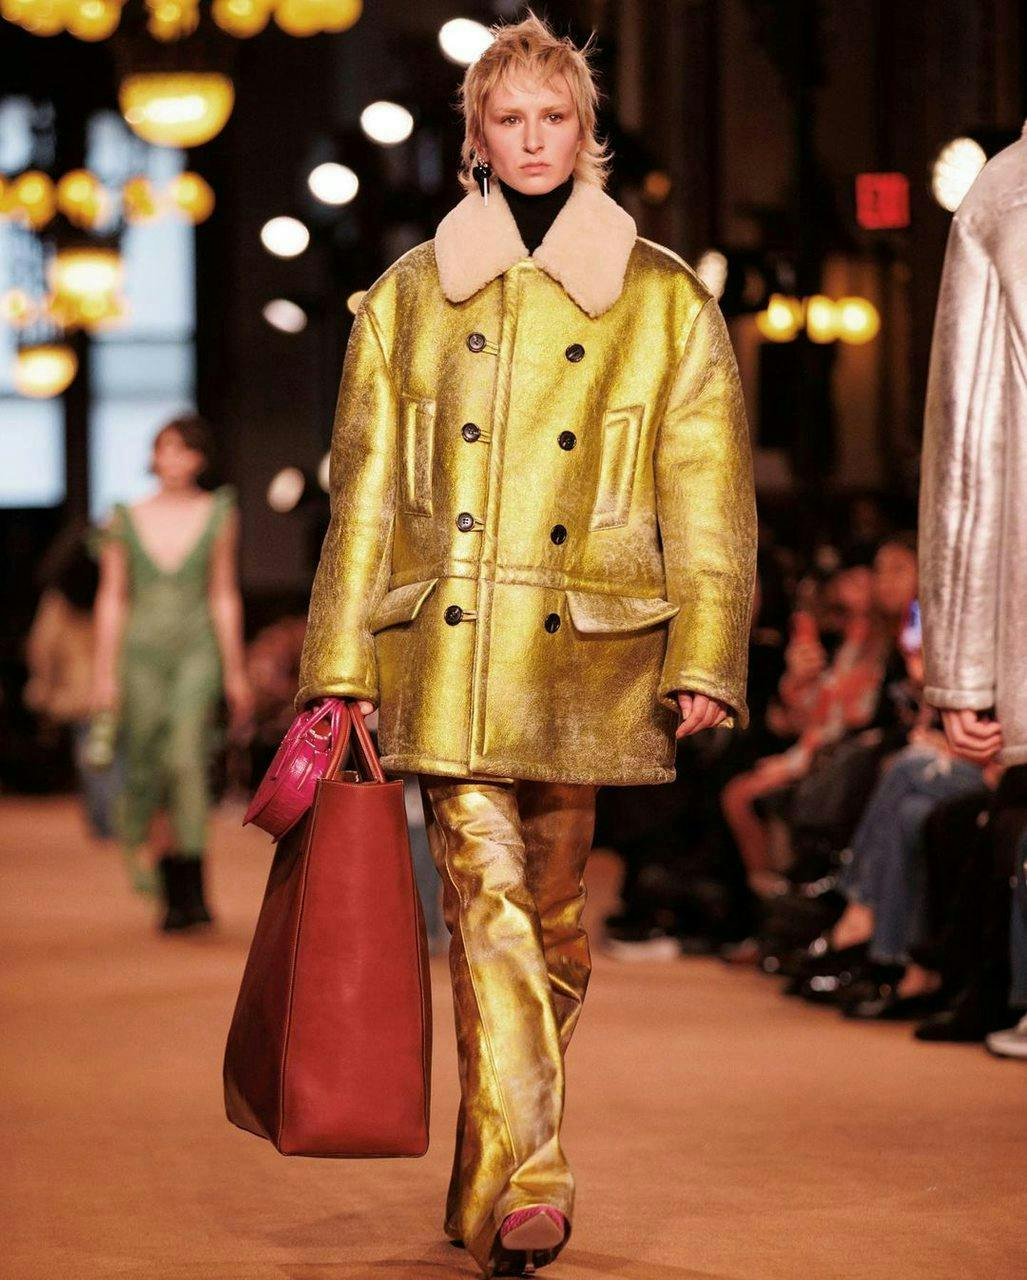 coat clothing lady person handbag man adult male fashion overcoat